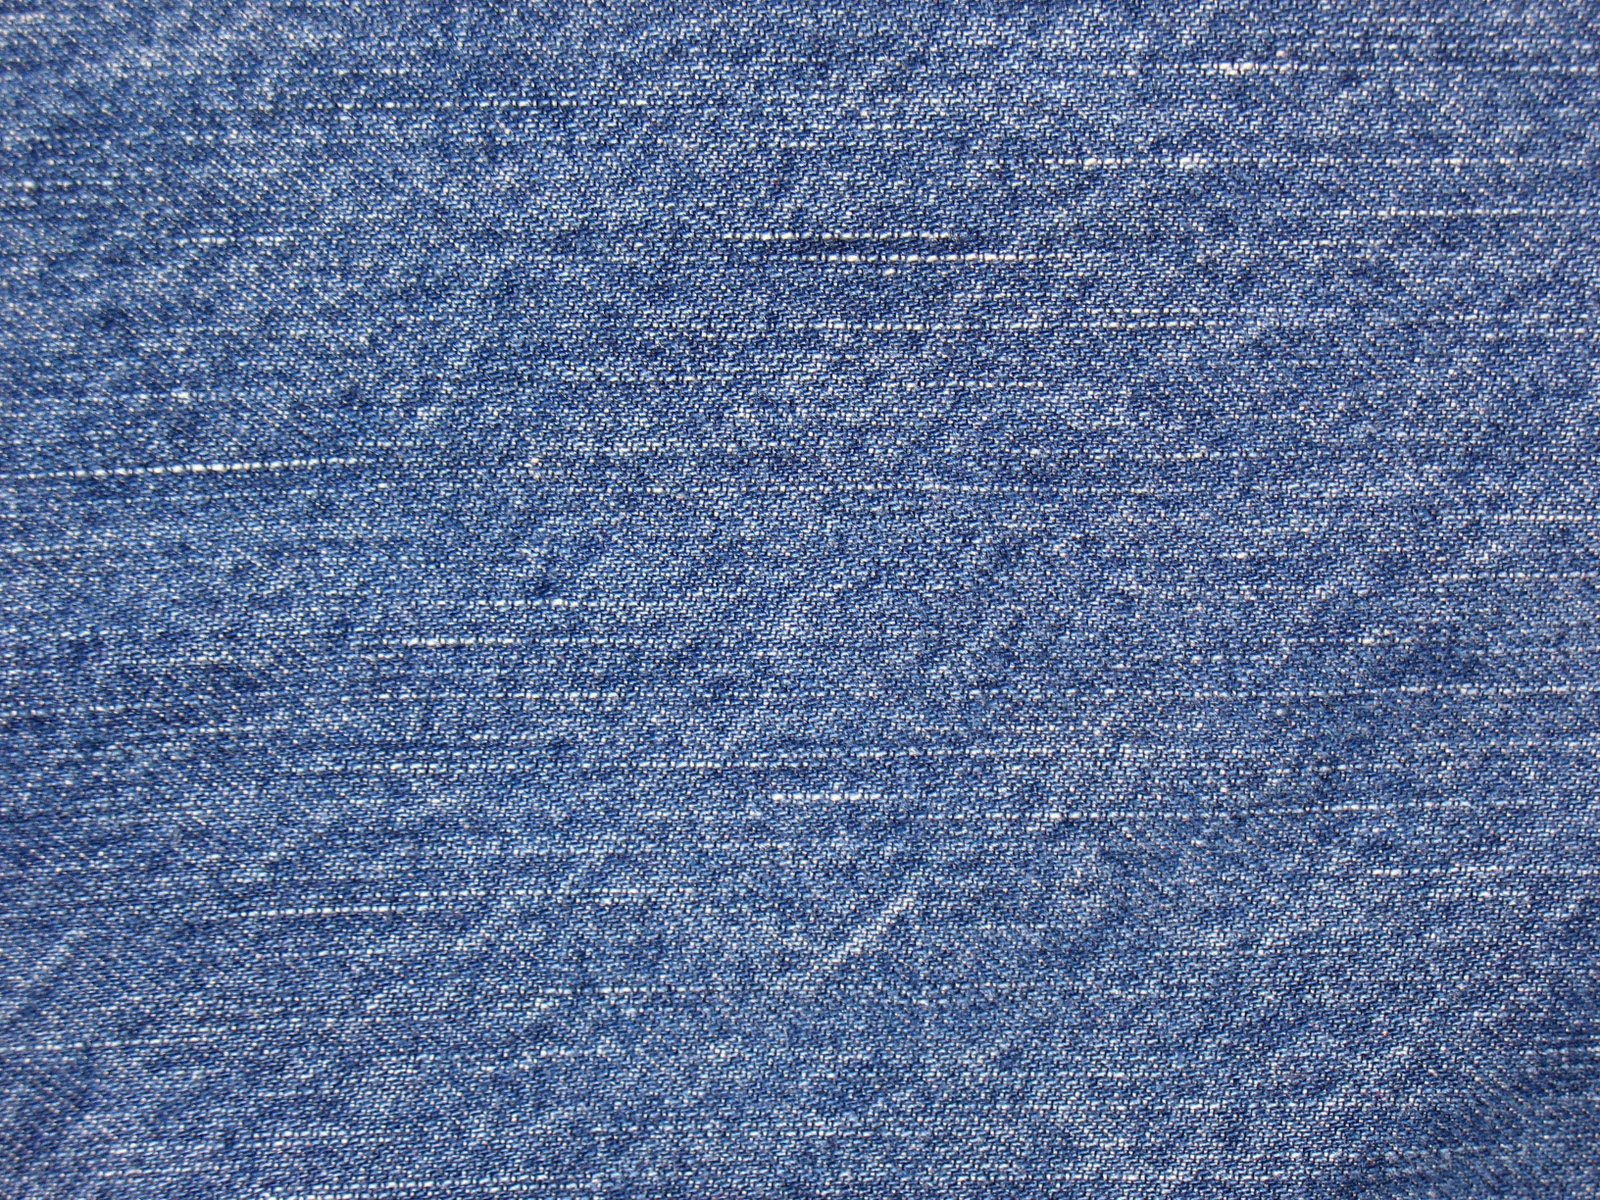 texture blue jeans cloth, download photo, background, jeans, , blue jeans texture, background